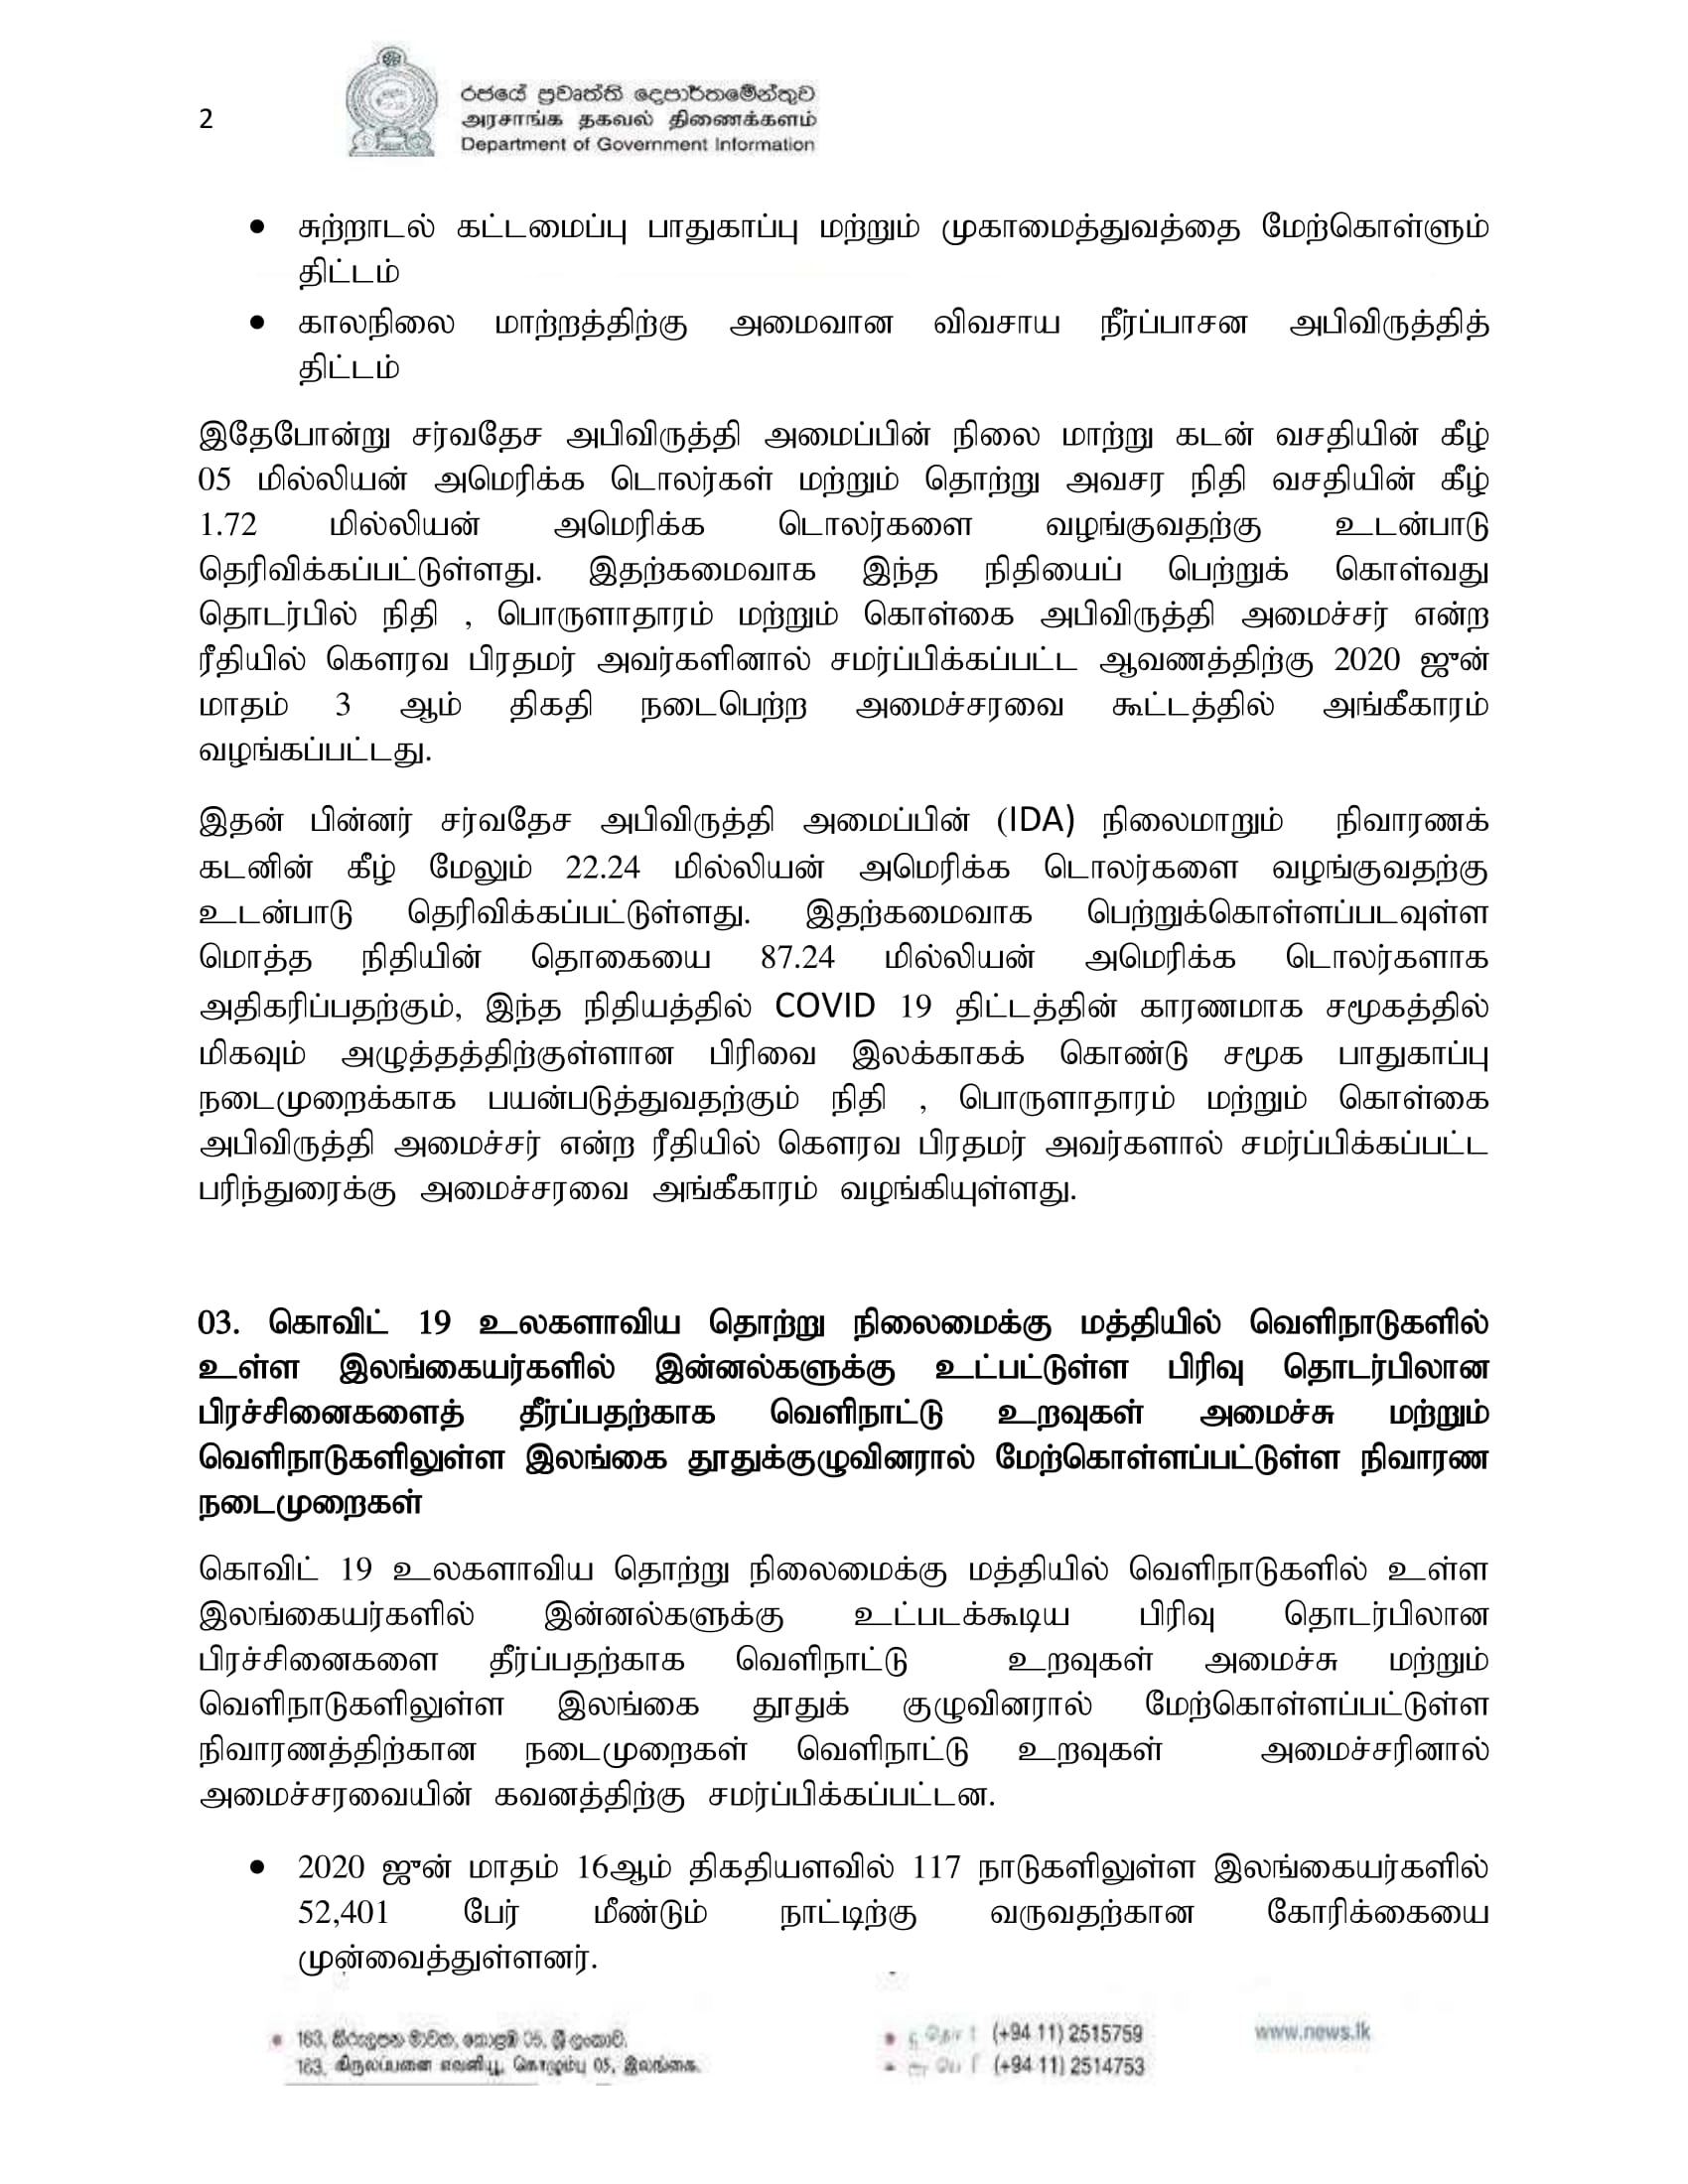 2020.06.24 Cabinet Tamil 1 1 2